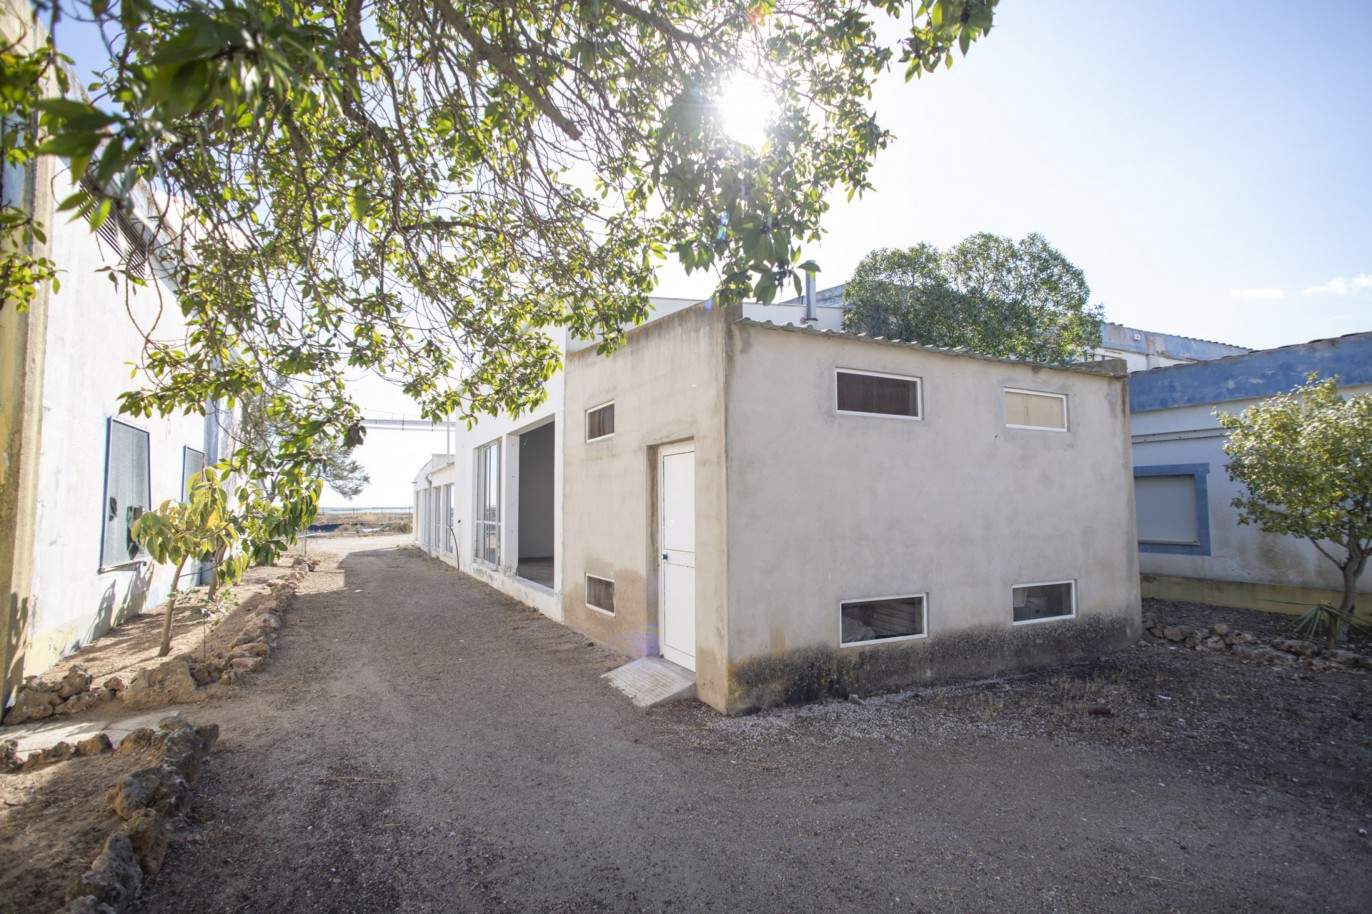 Property for sale in Ria Formosa, Algarve_209722